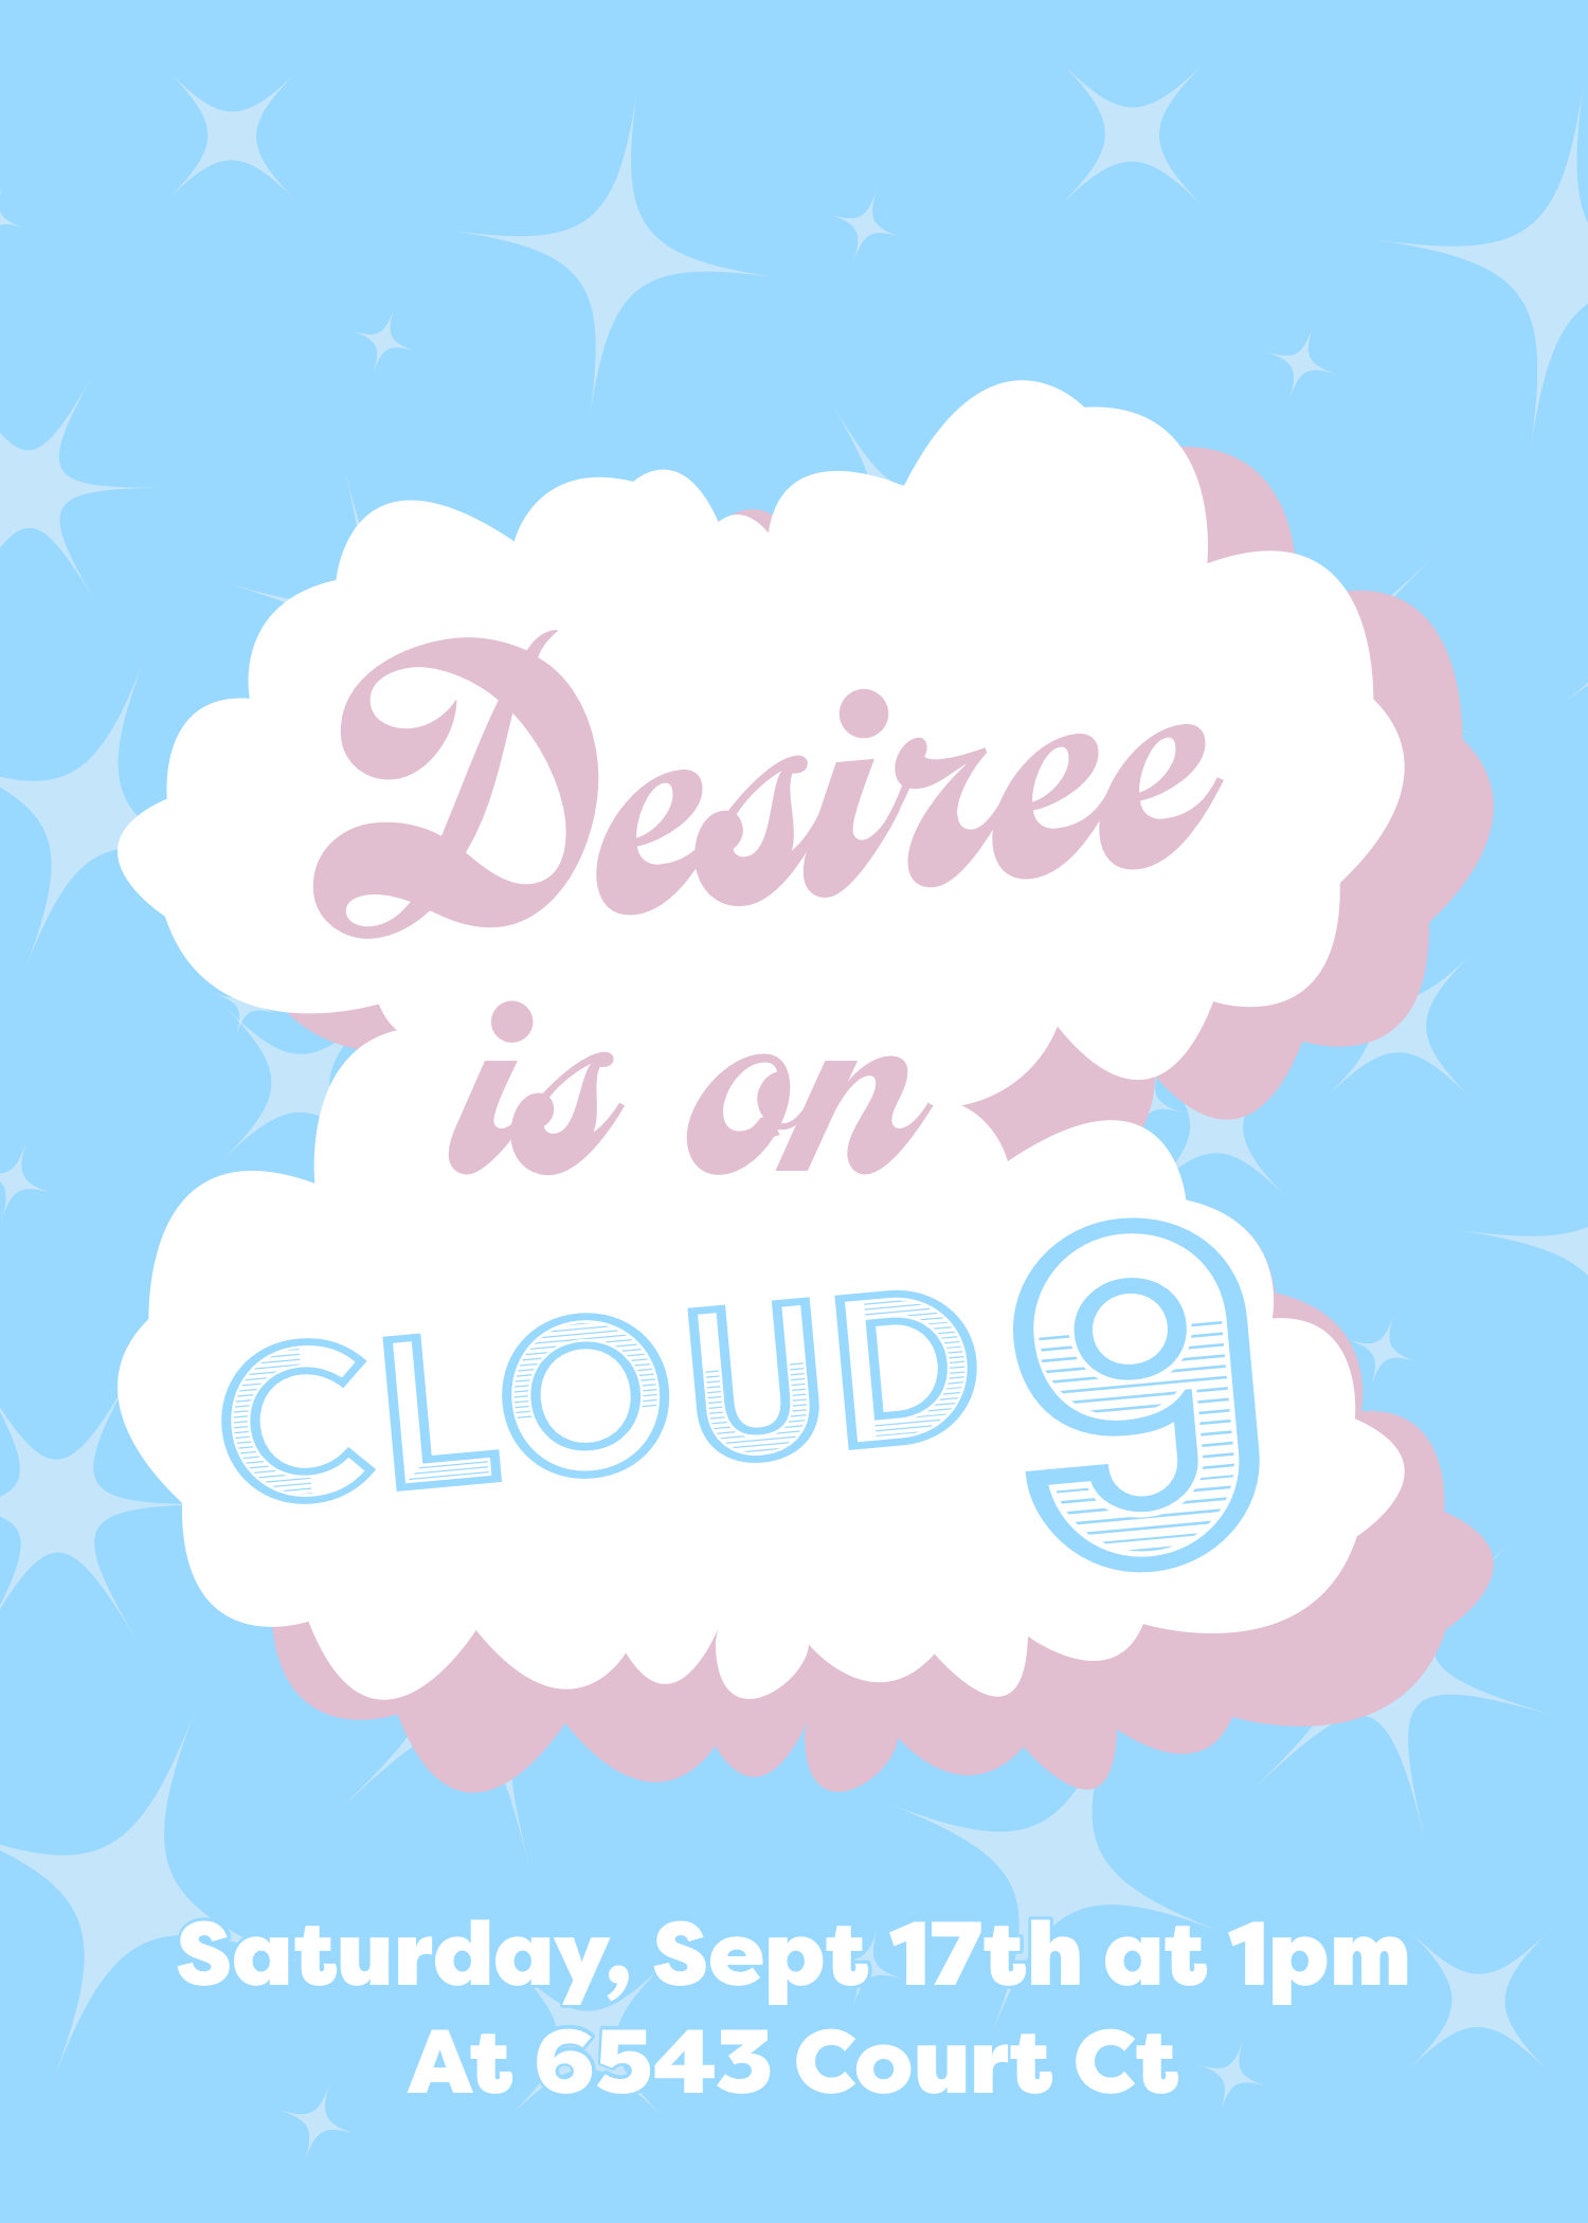 cloud-9-birthday-invitation-9th-birthday-party-theme-etsy-uk